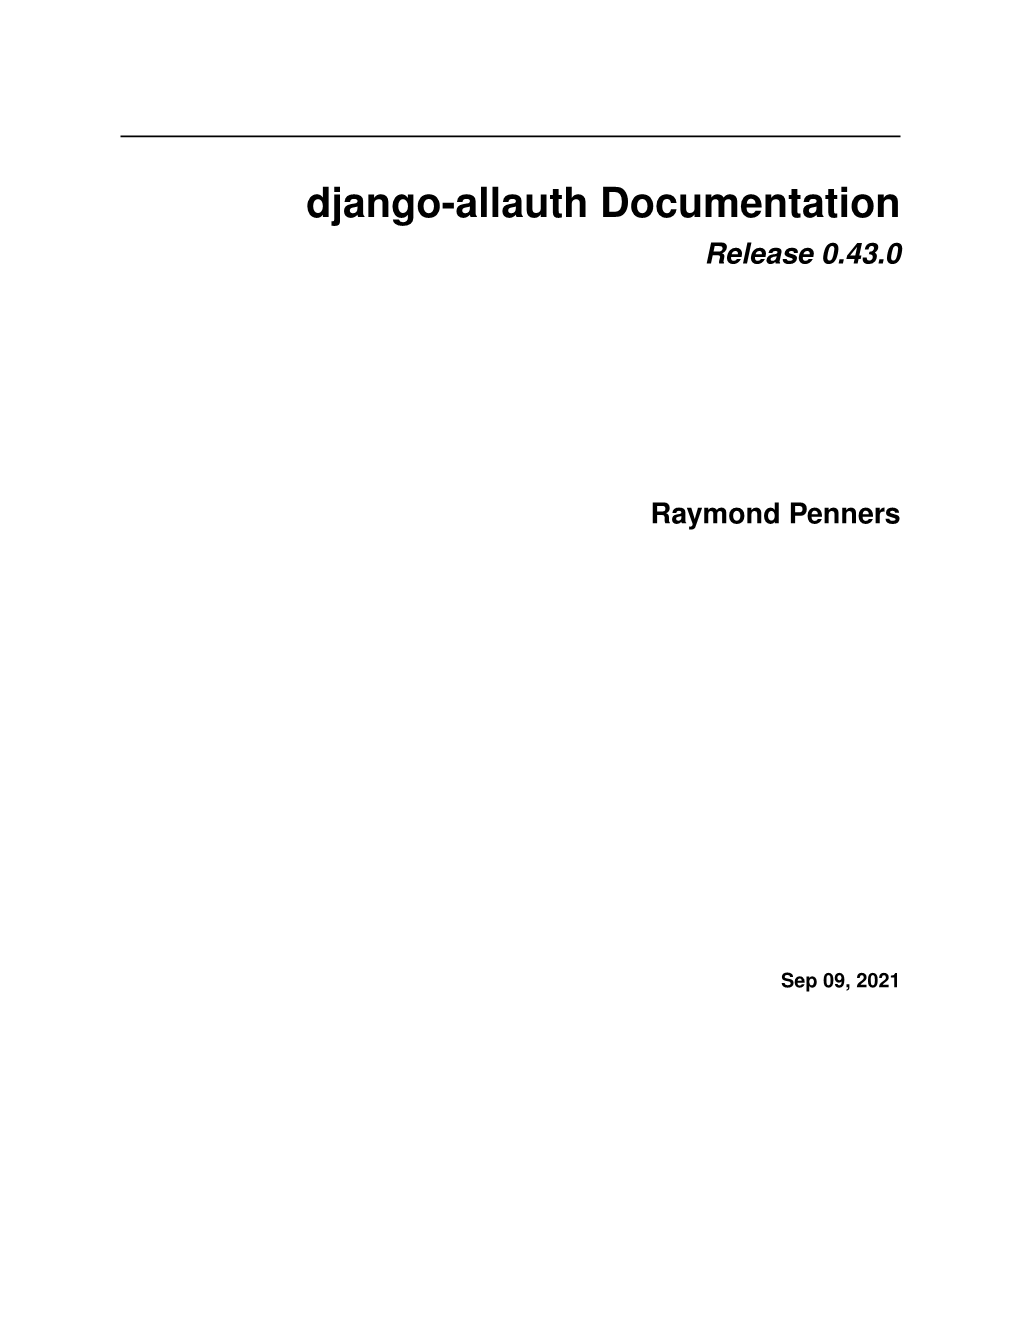 Django-Allauth Documentation Release 0.43.0